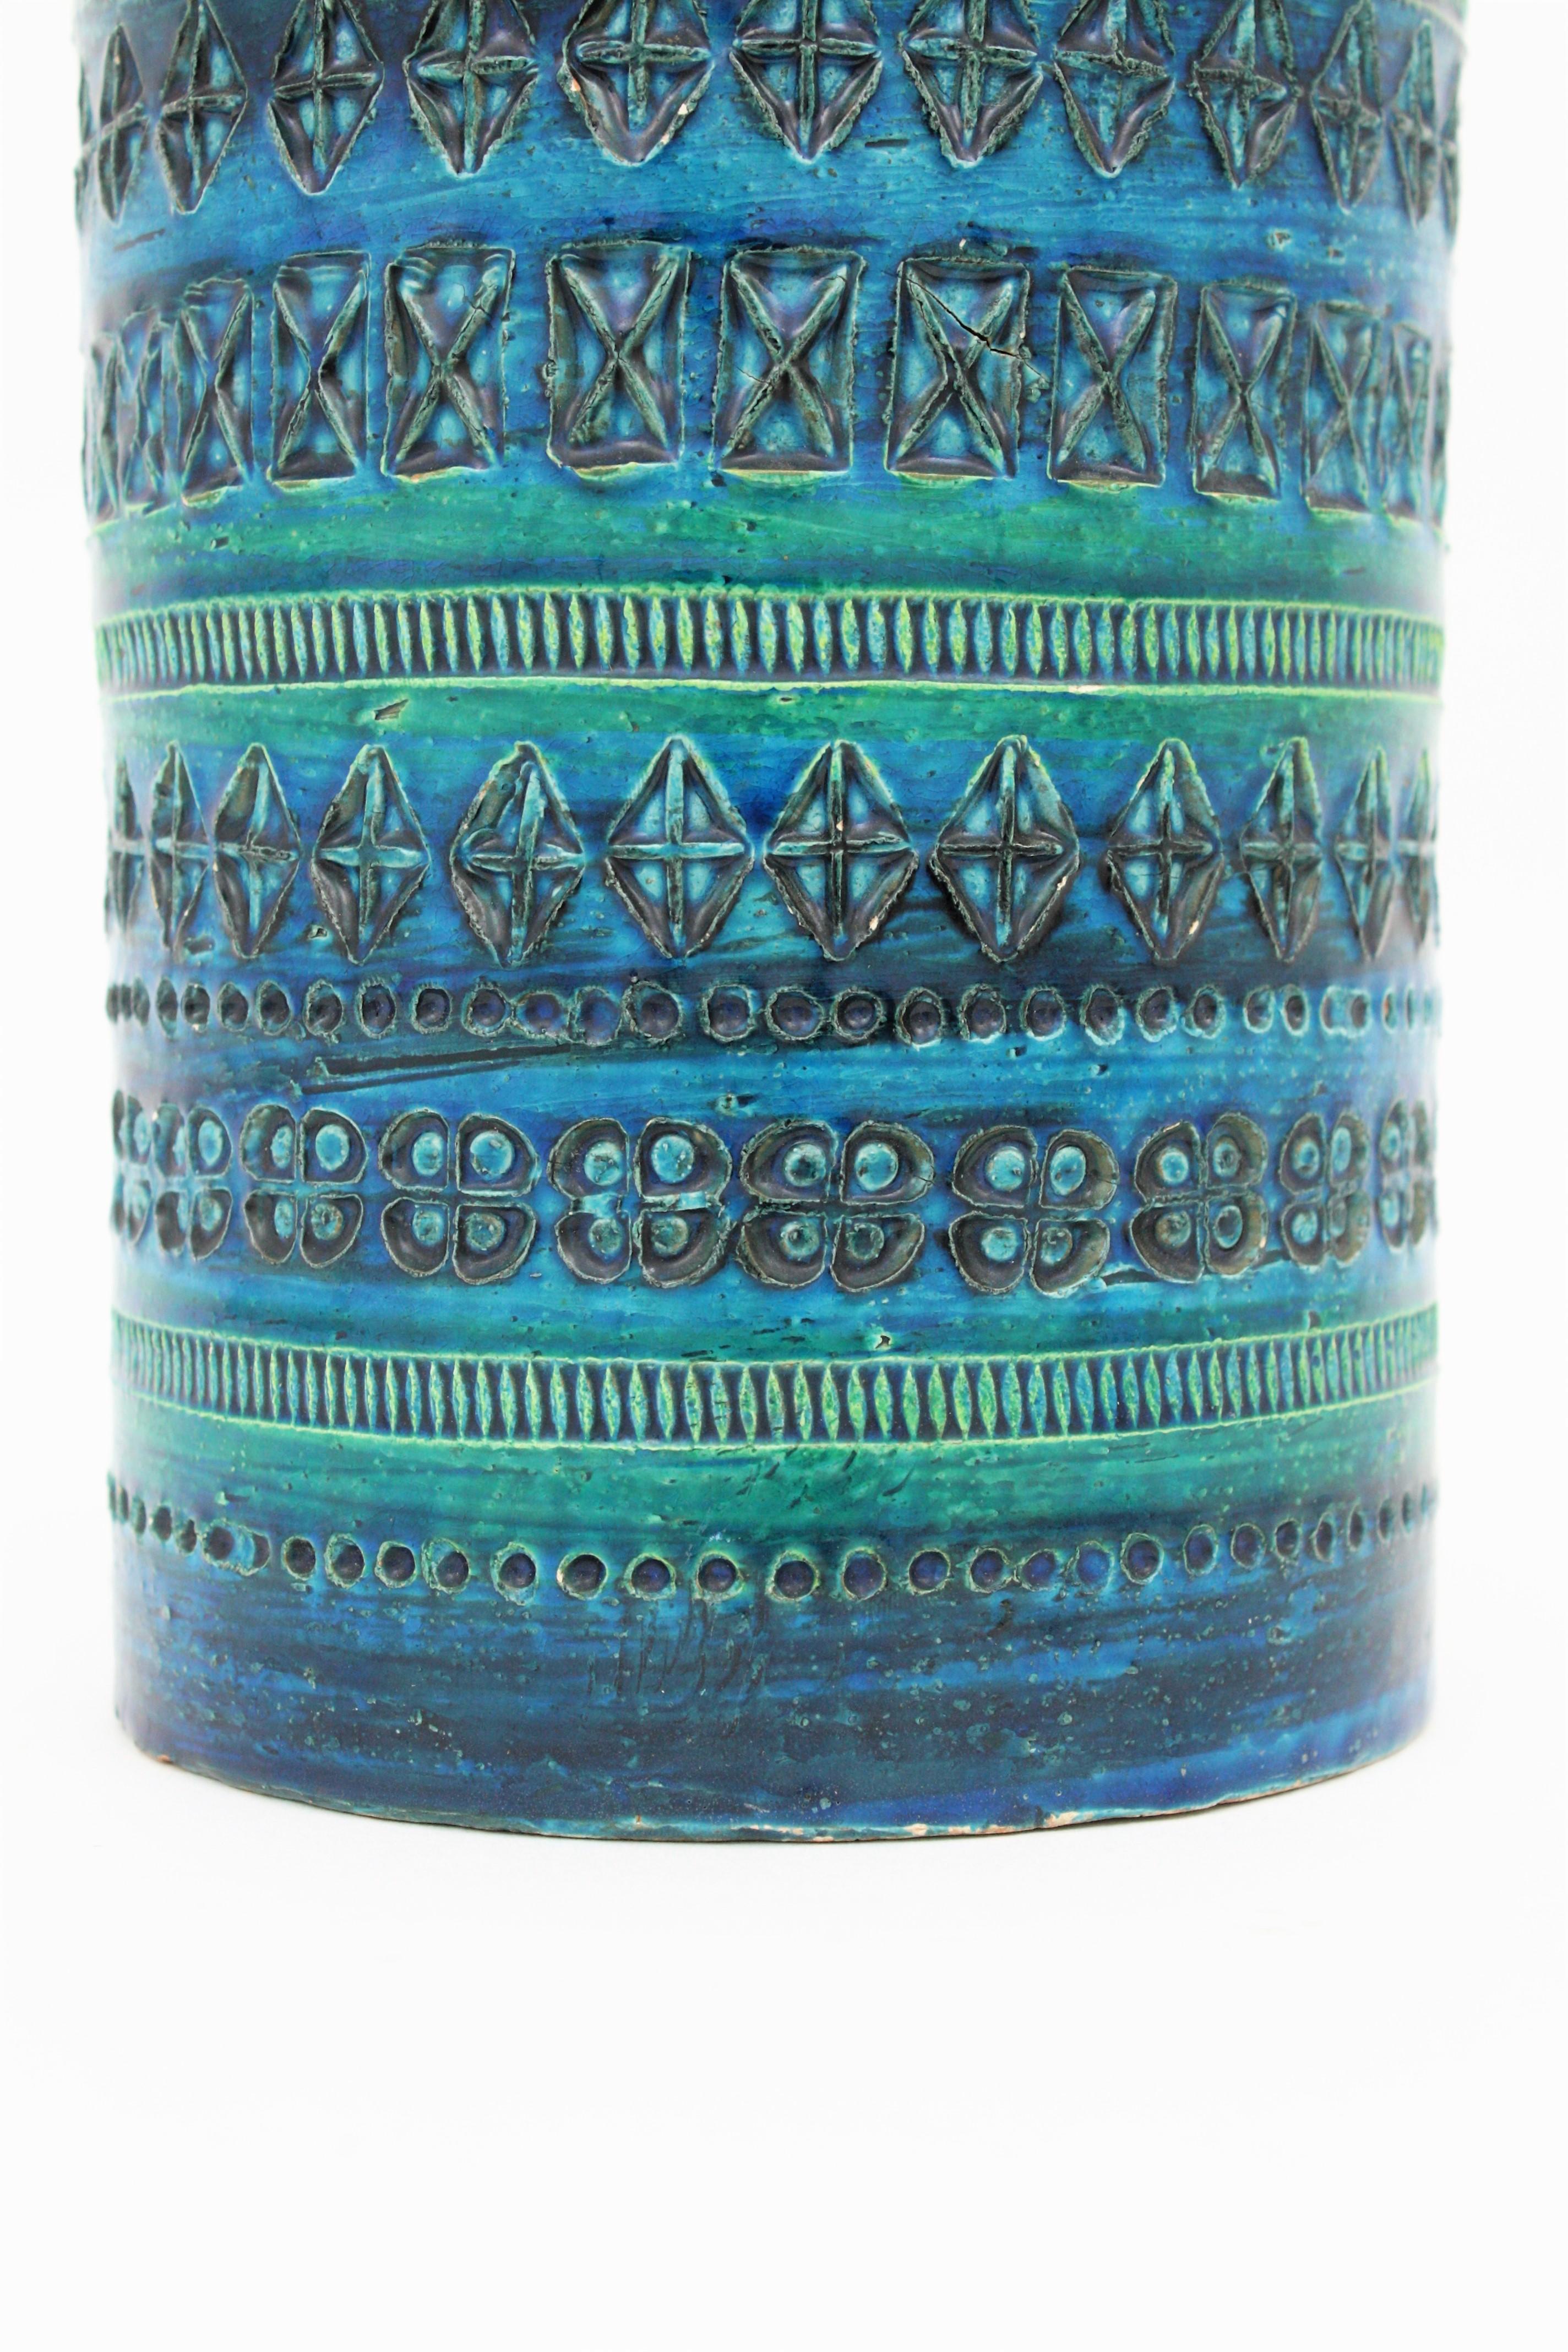 Aldo Londi for Bitossi Rimini Blue Glazed Ceramic Extra Large Vase, Italy, 1960s 3